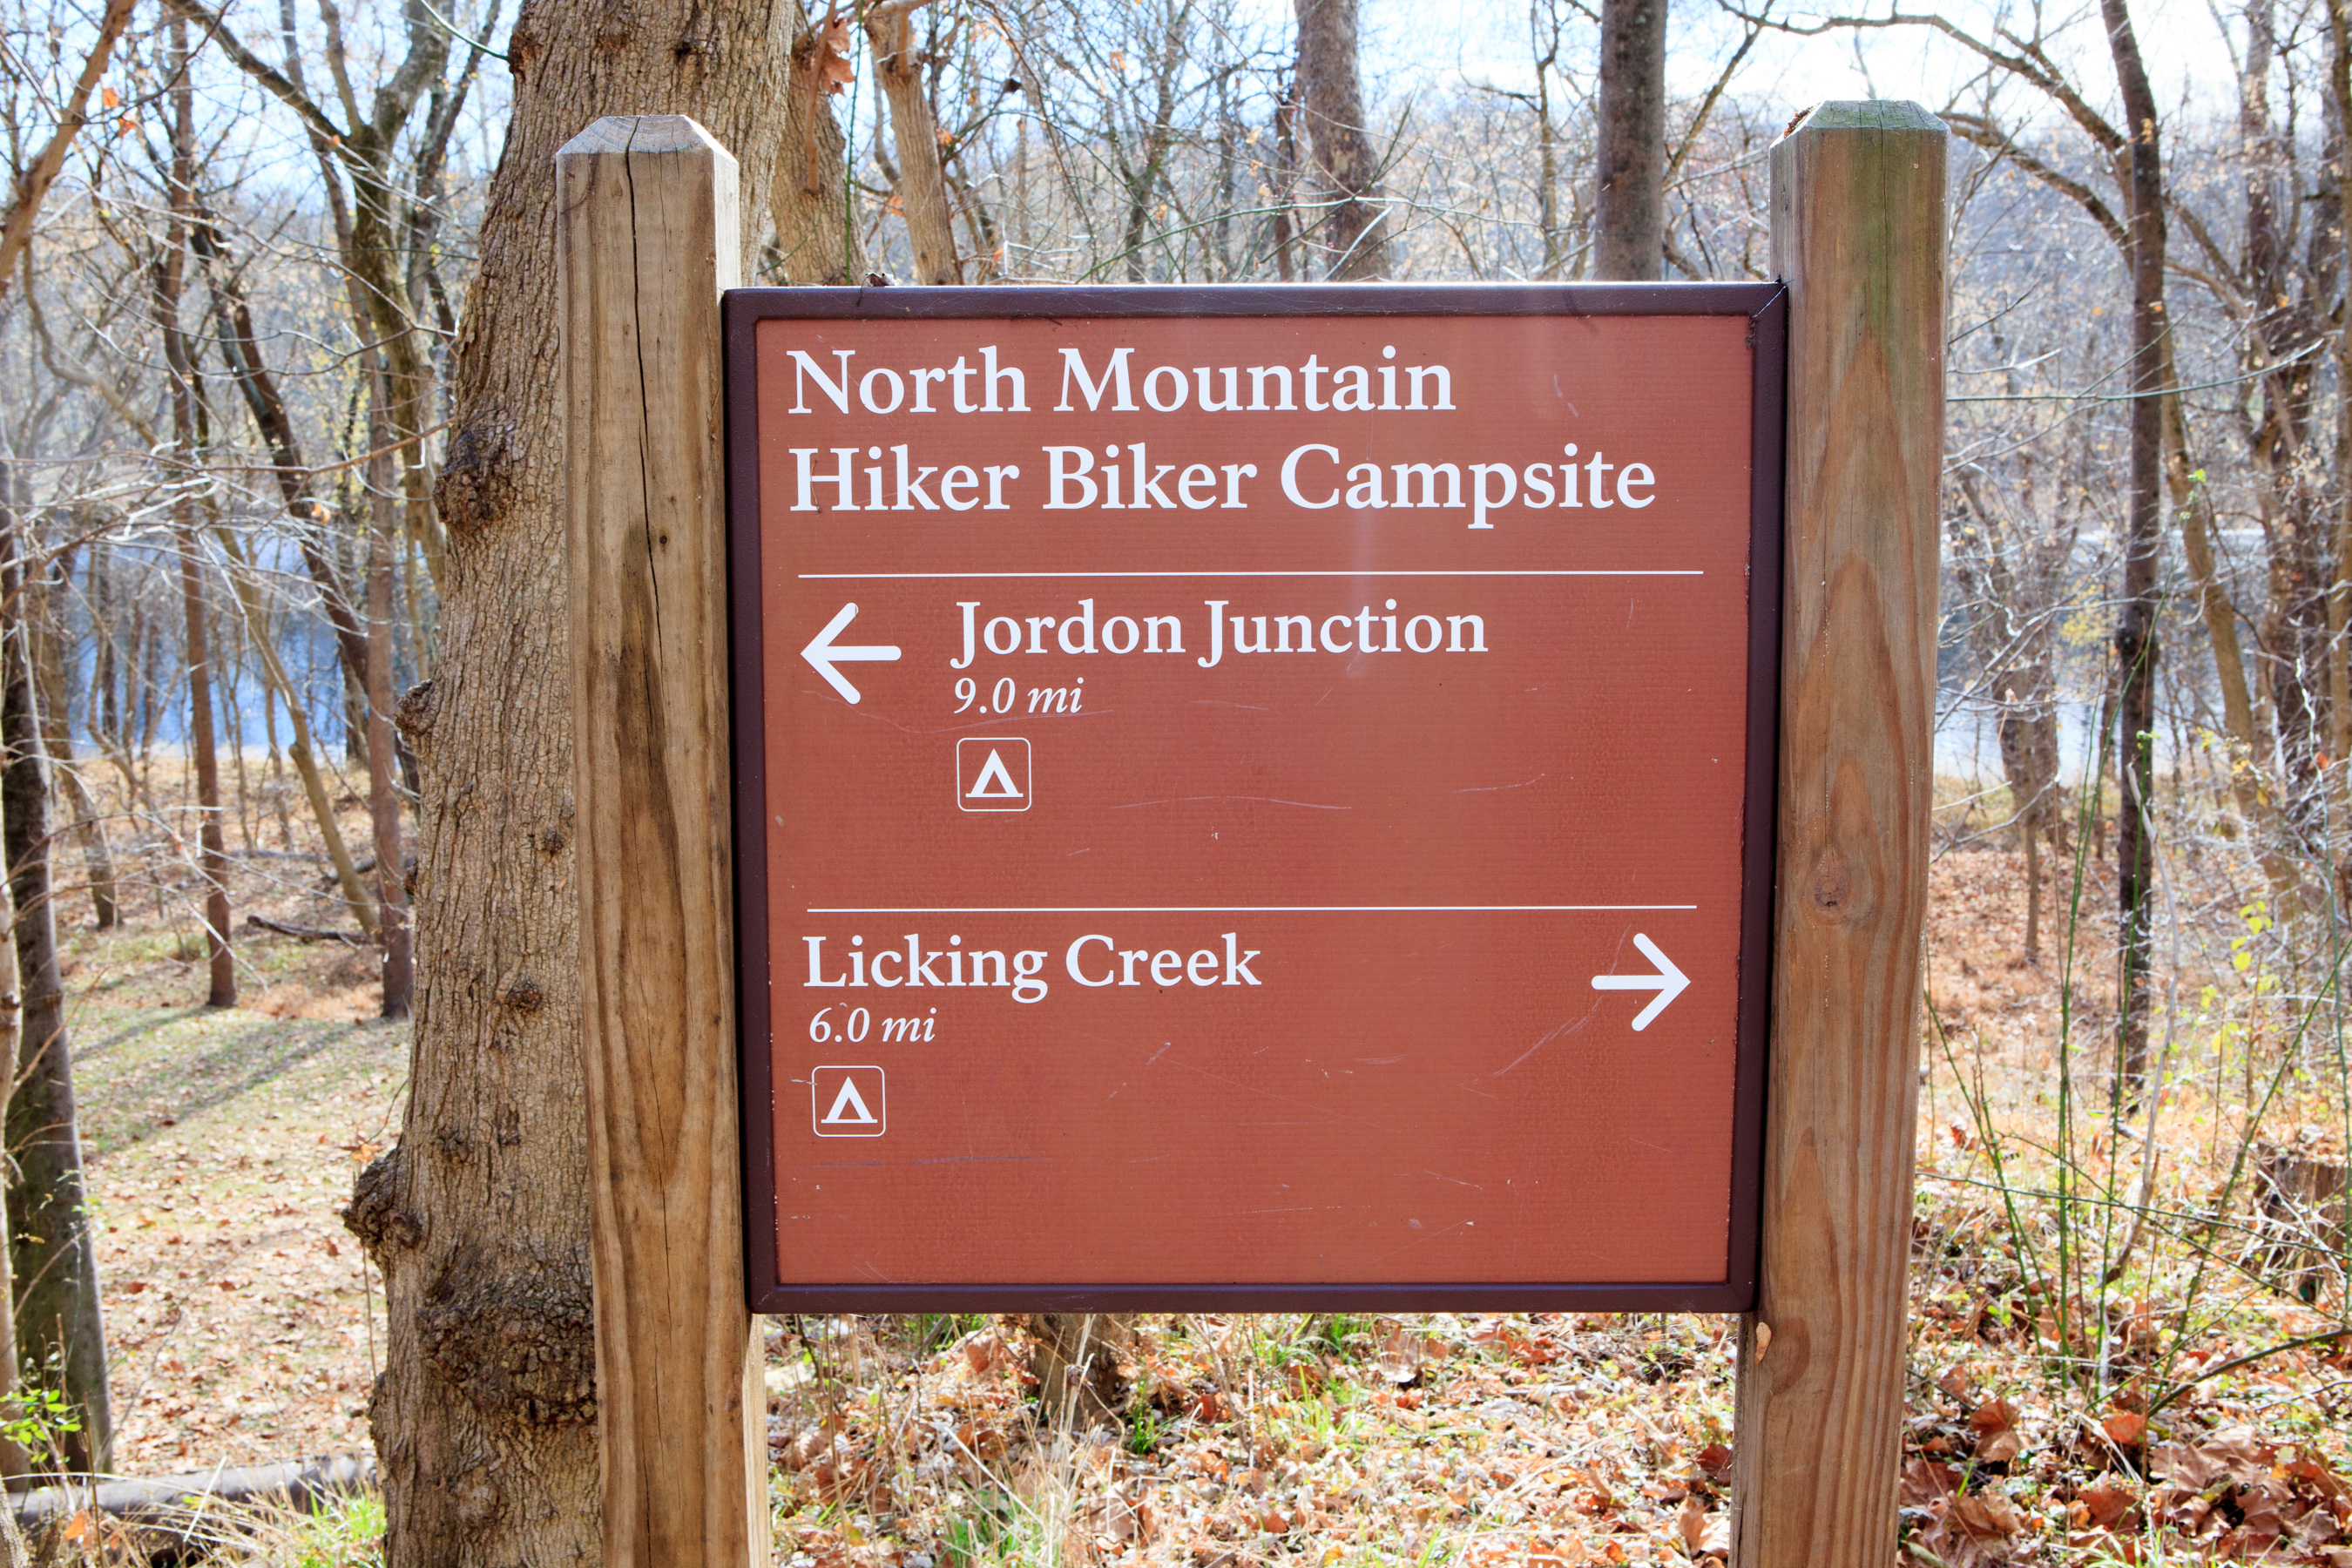 Campsite sign describing next nearest camping areas.